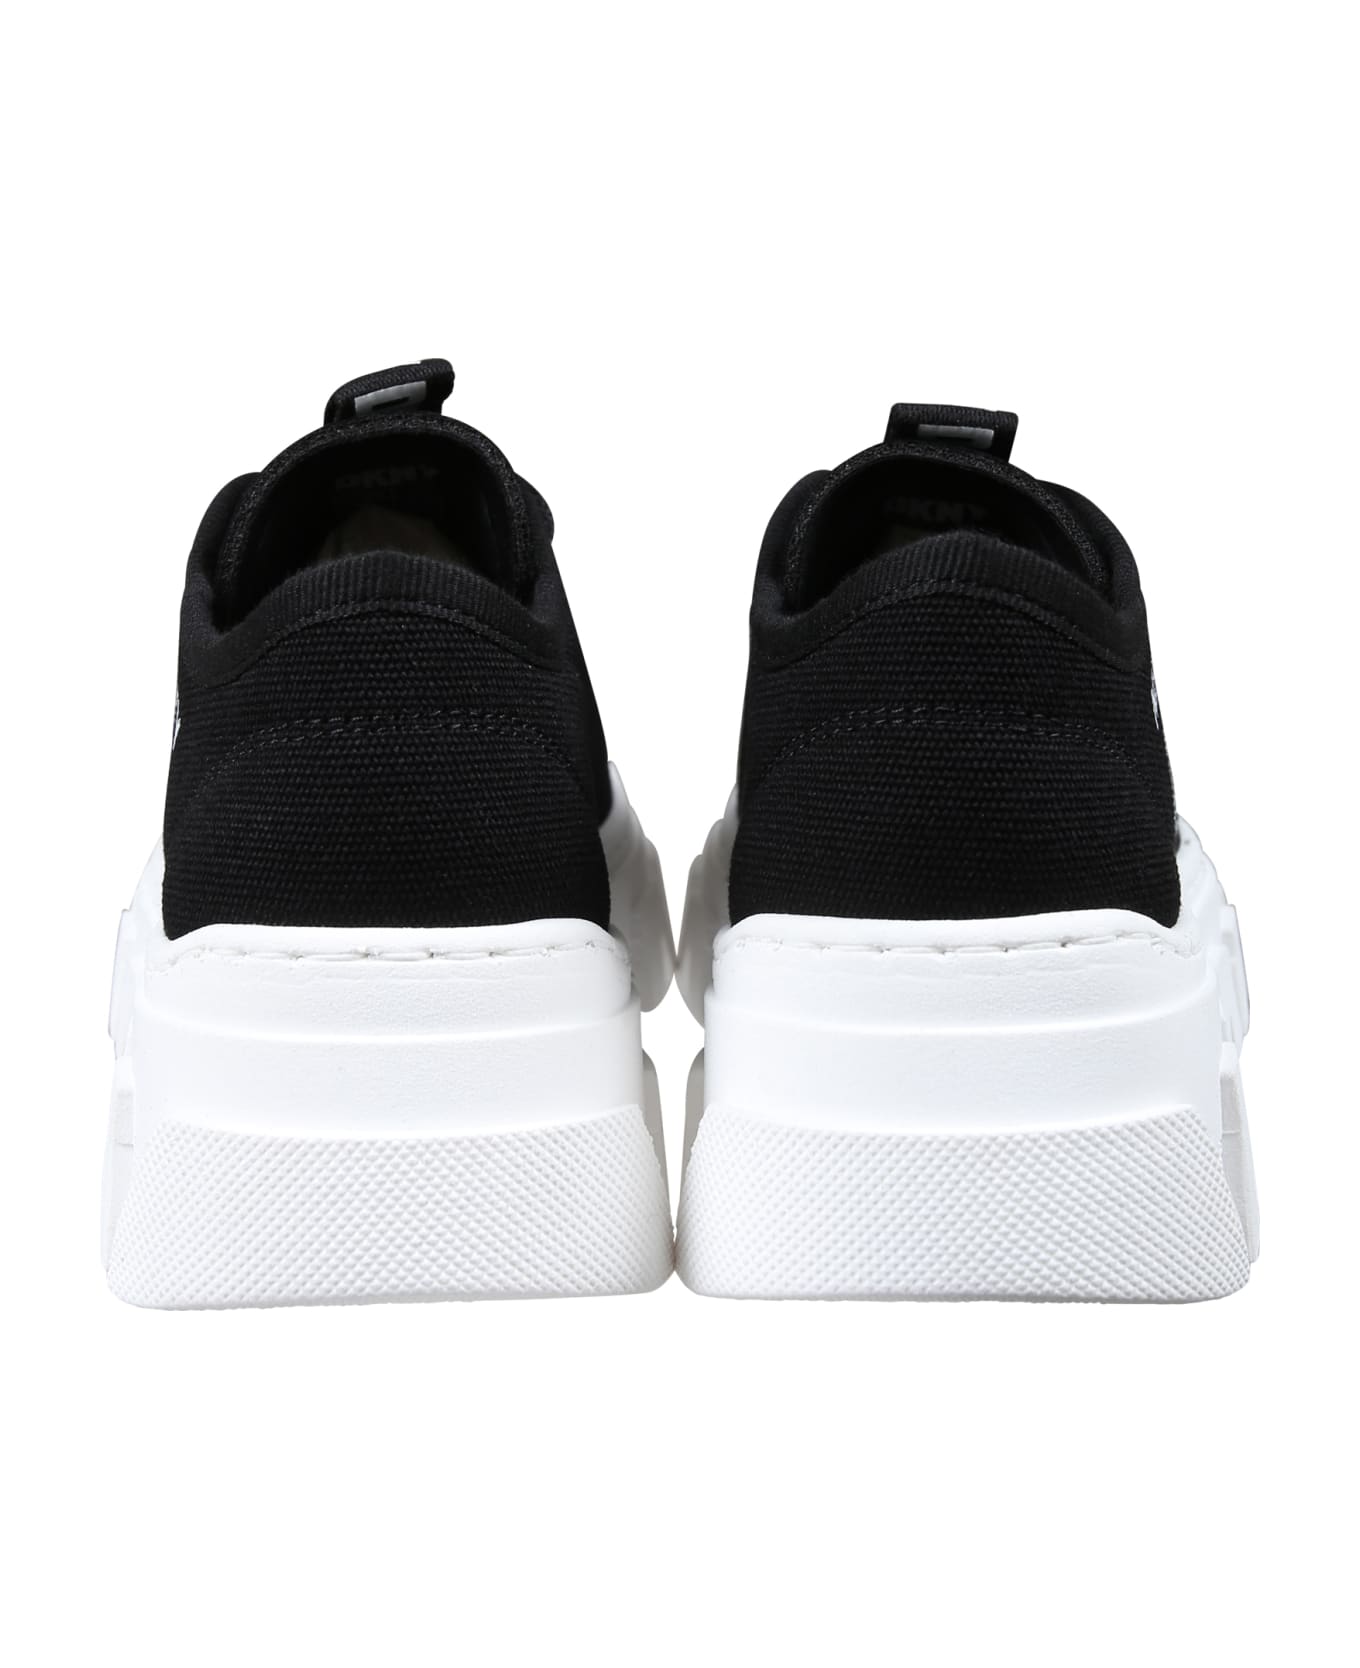 DKNY Black Sneakers For Girl With Logo - Black シューズ